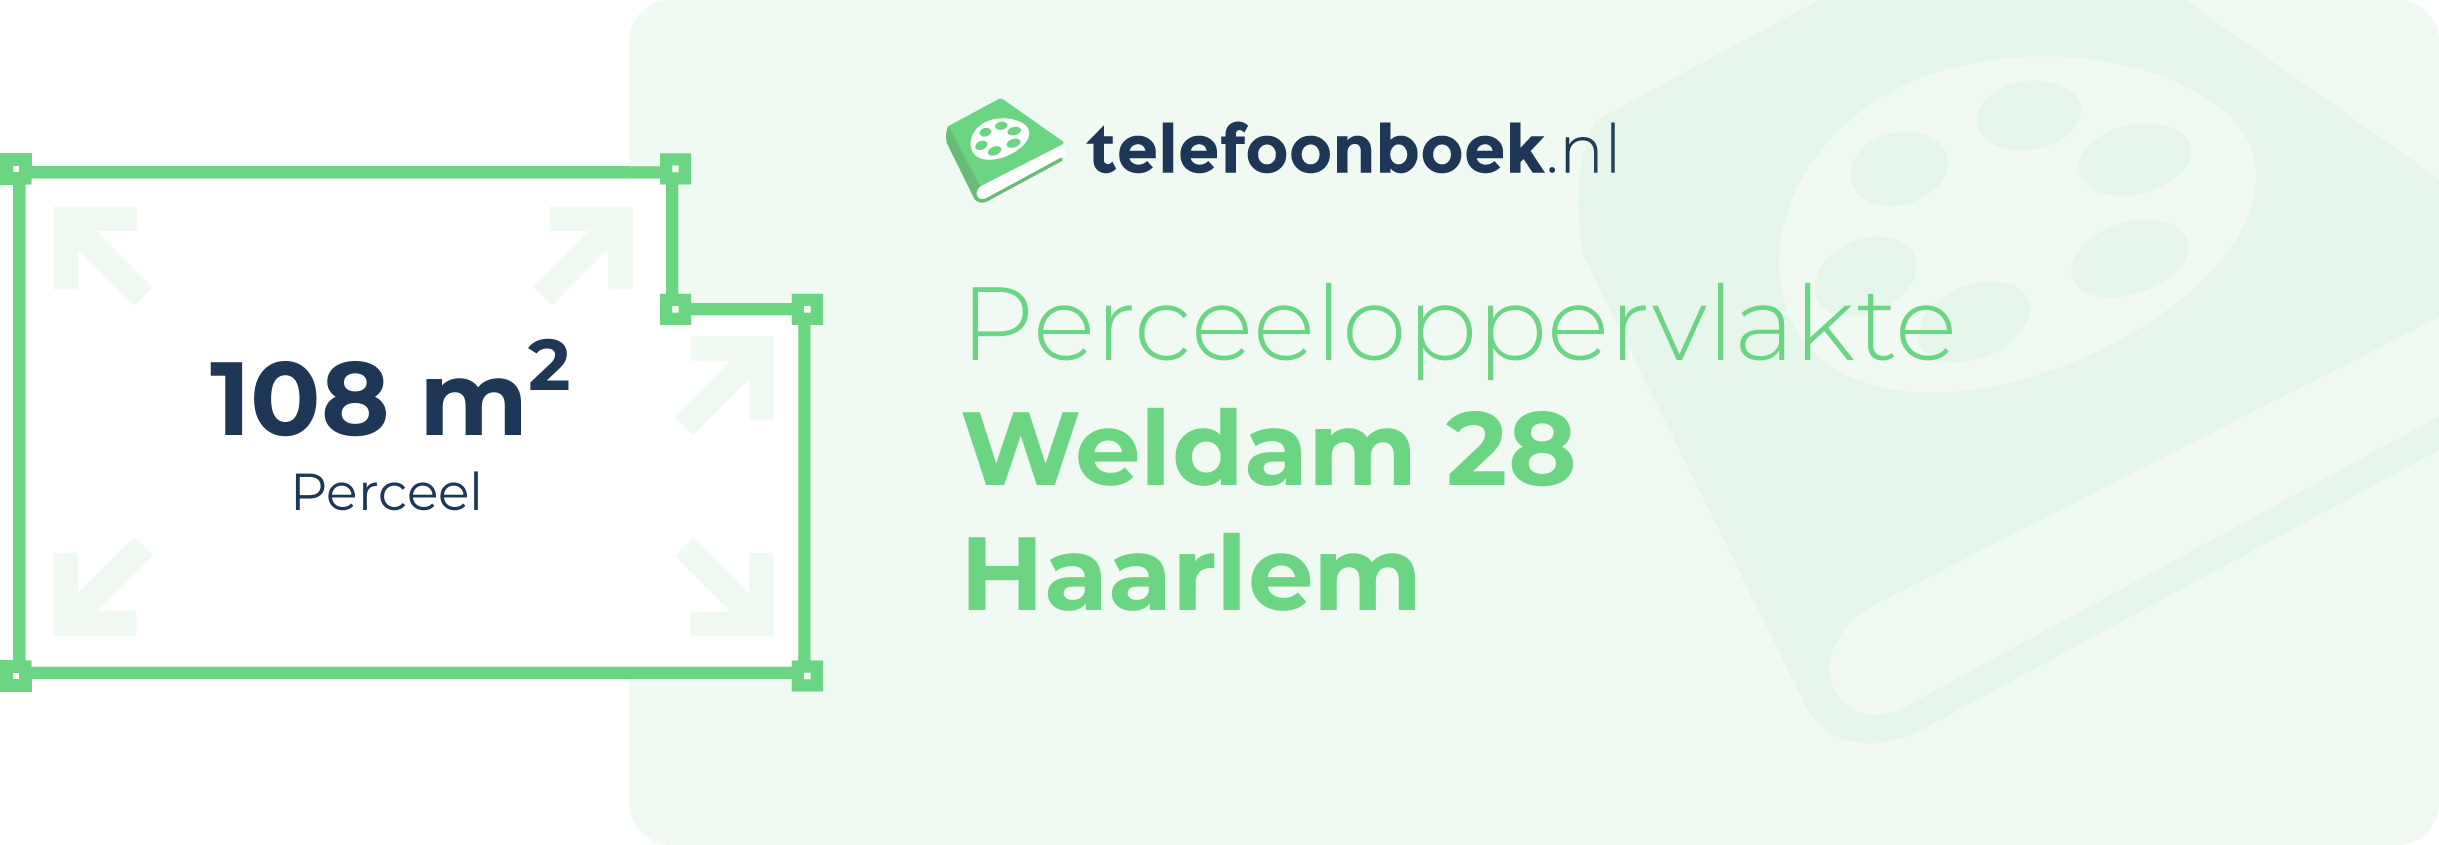 Perceeloppervlakte Weldam 28 Haarlem